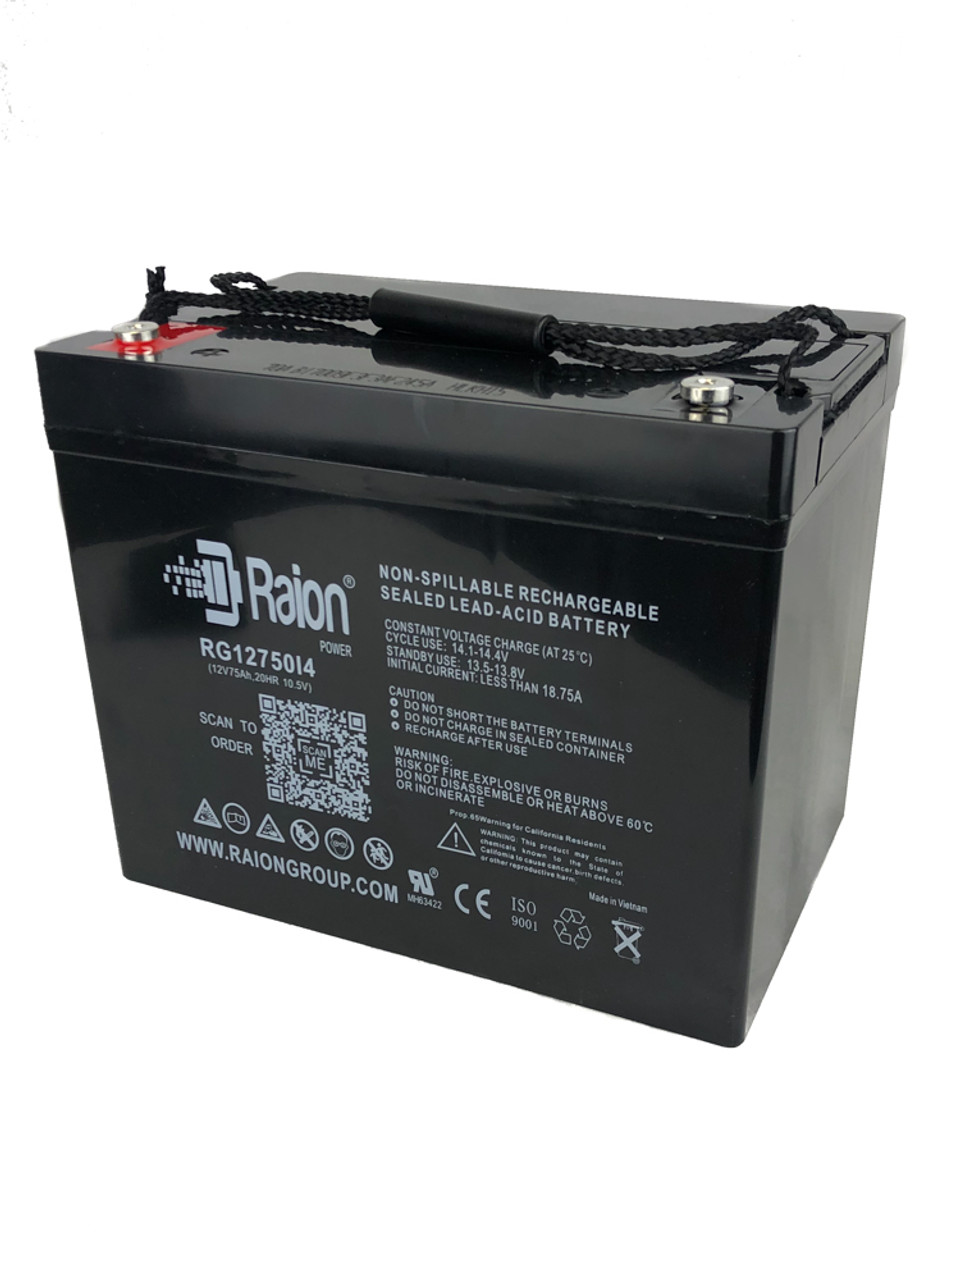 Raion Power RG12750I4 12V 75Ah Lead Acid Battery for Daymak Boomerbuggy Deluxe